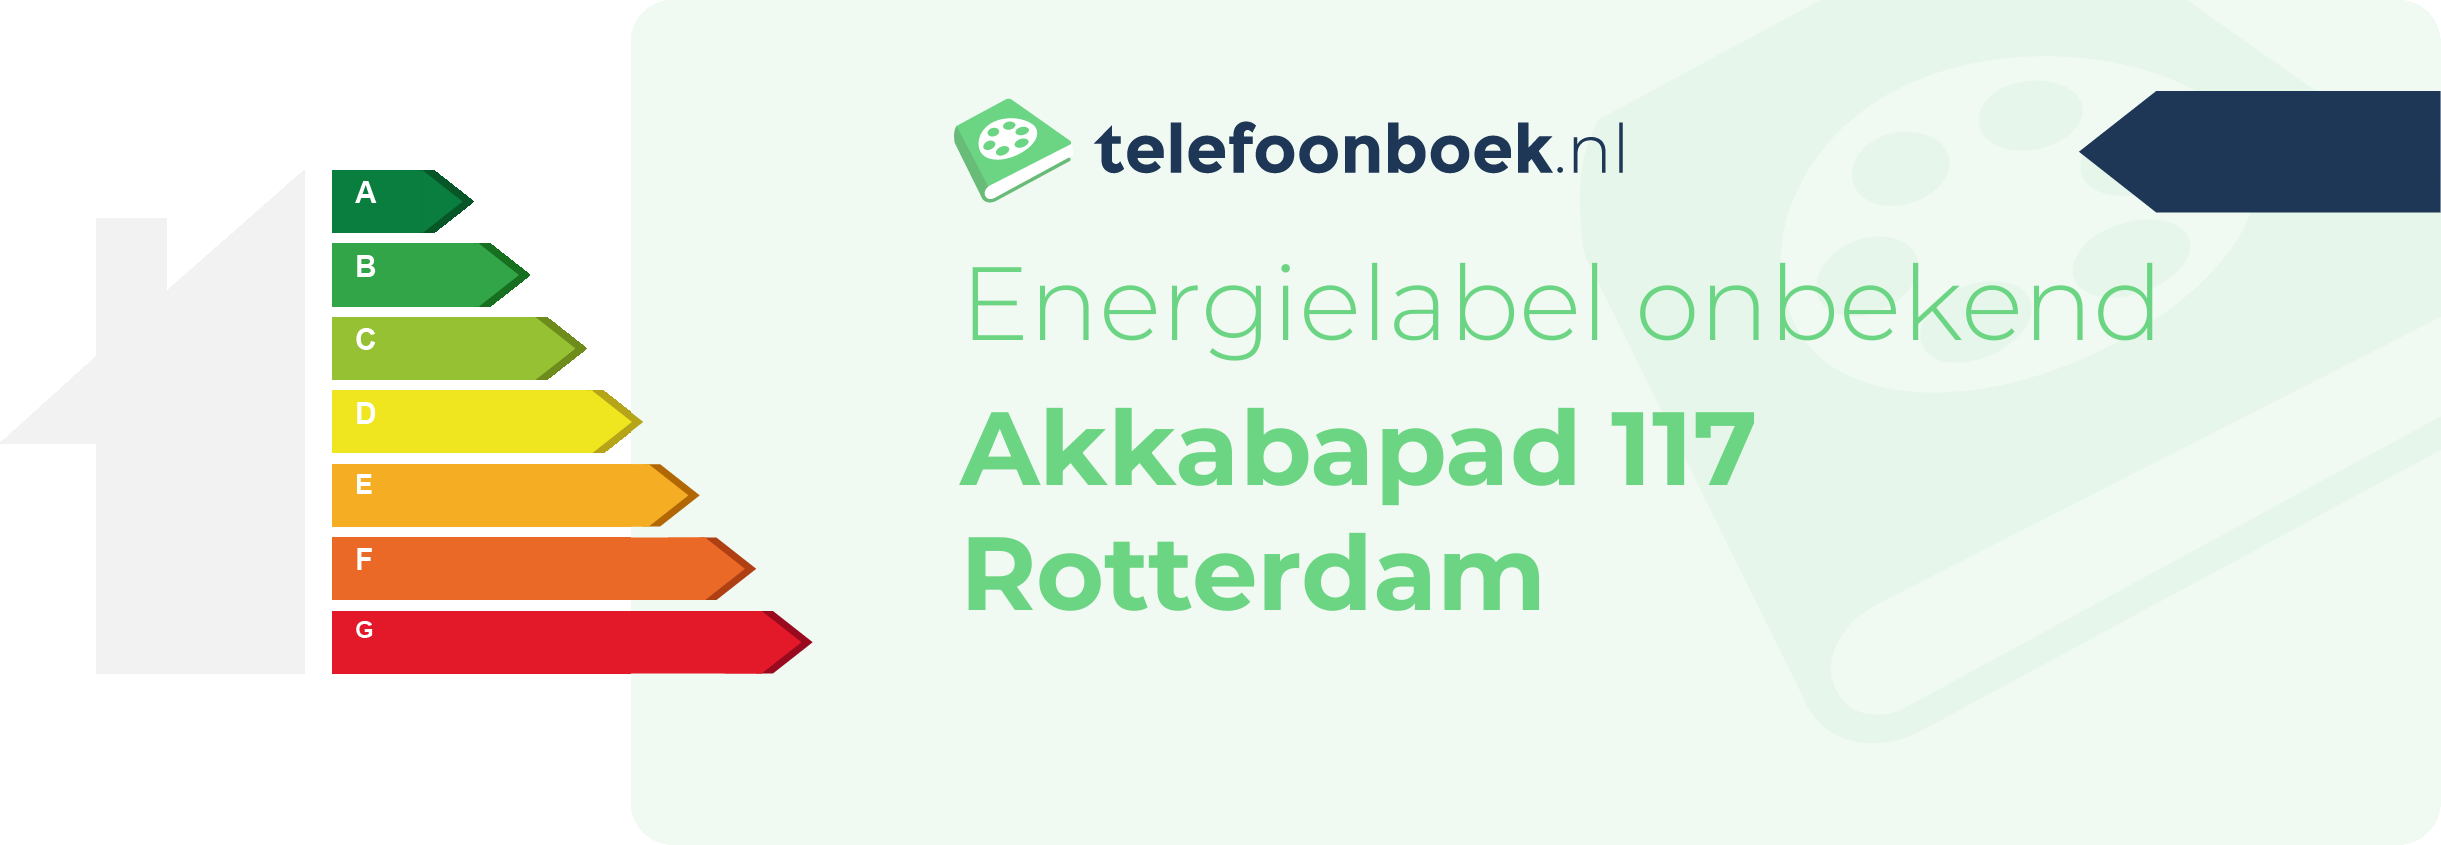 Energielabel Akkabapad 117 Rotterdam